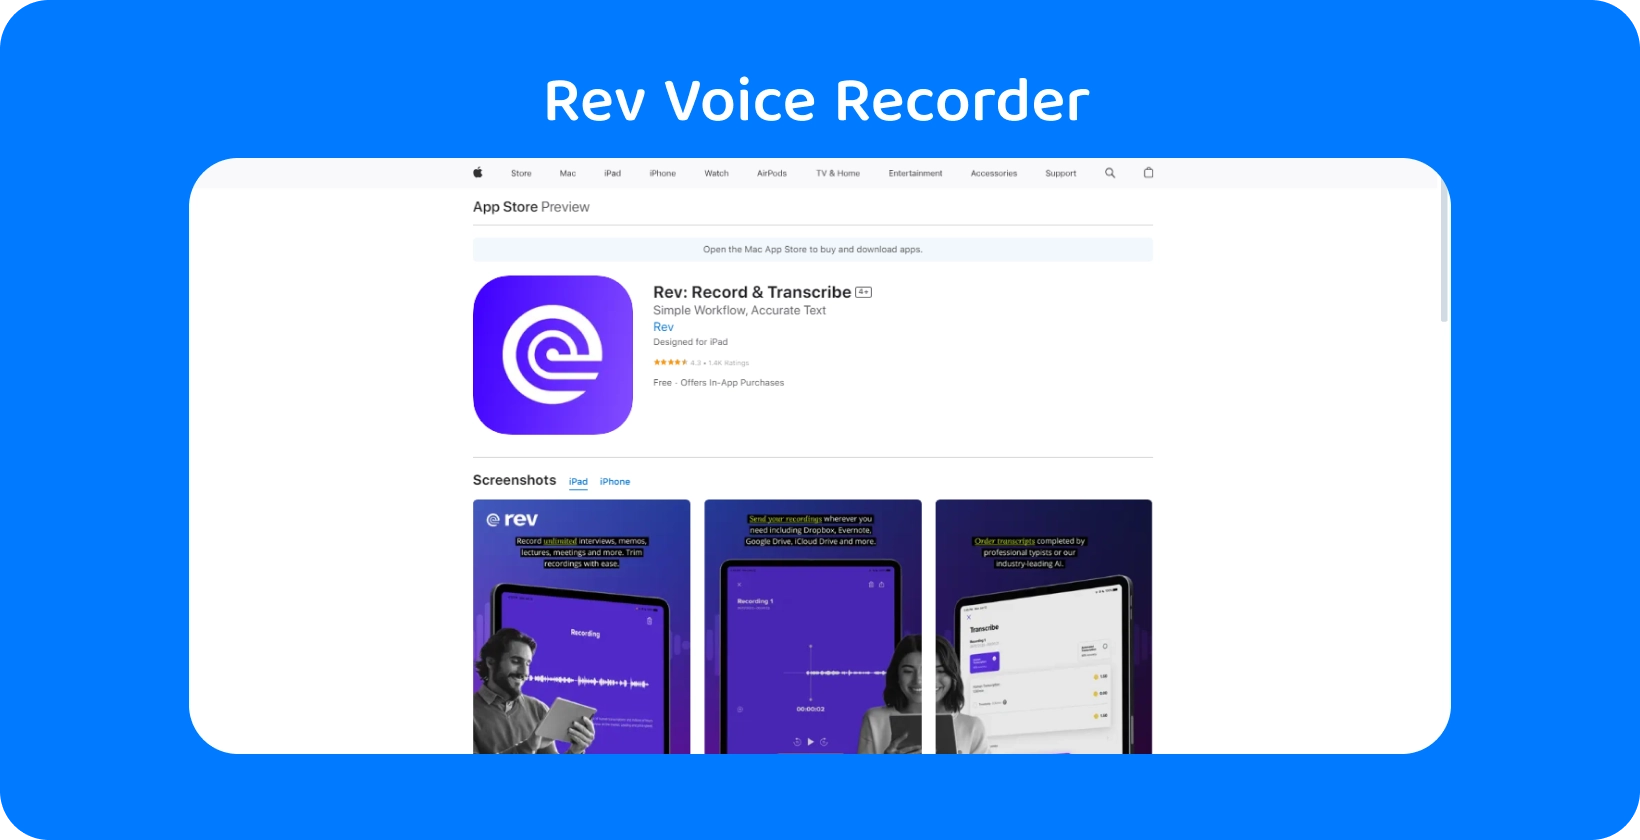 Rev Voice Recorder 应用程序在 Apple App Store 中，突出了其时尚的设计和转录功能。